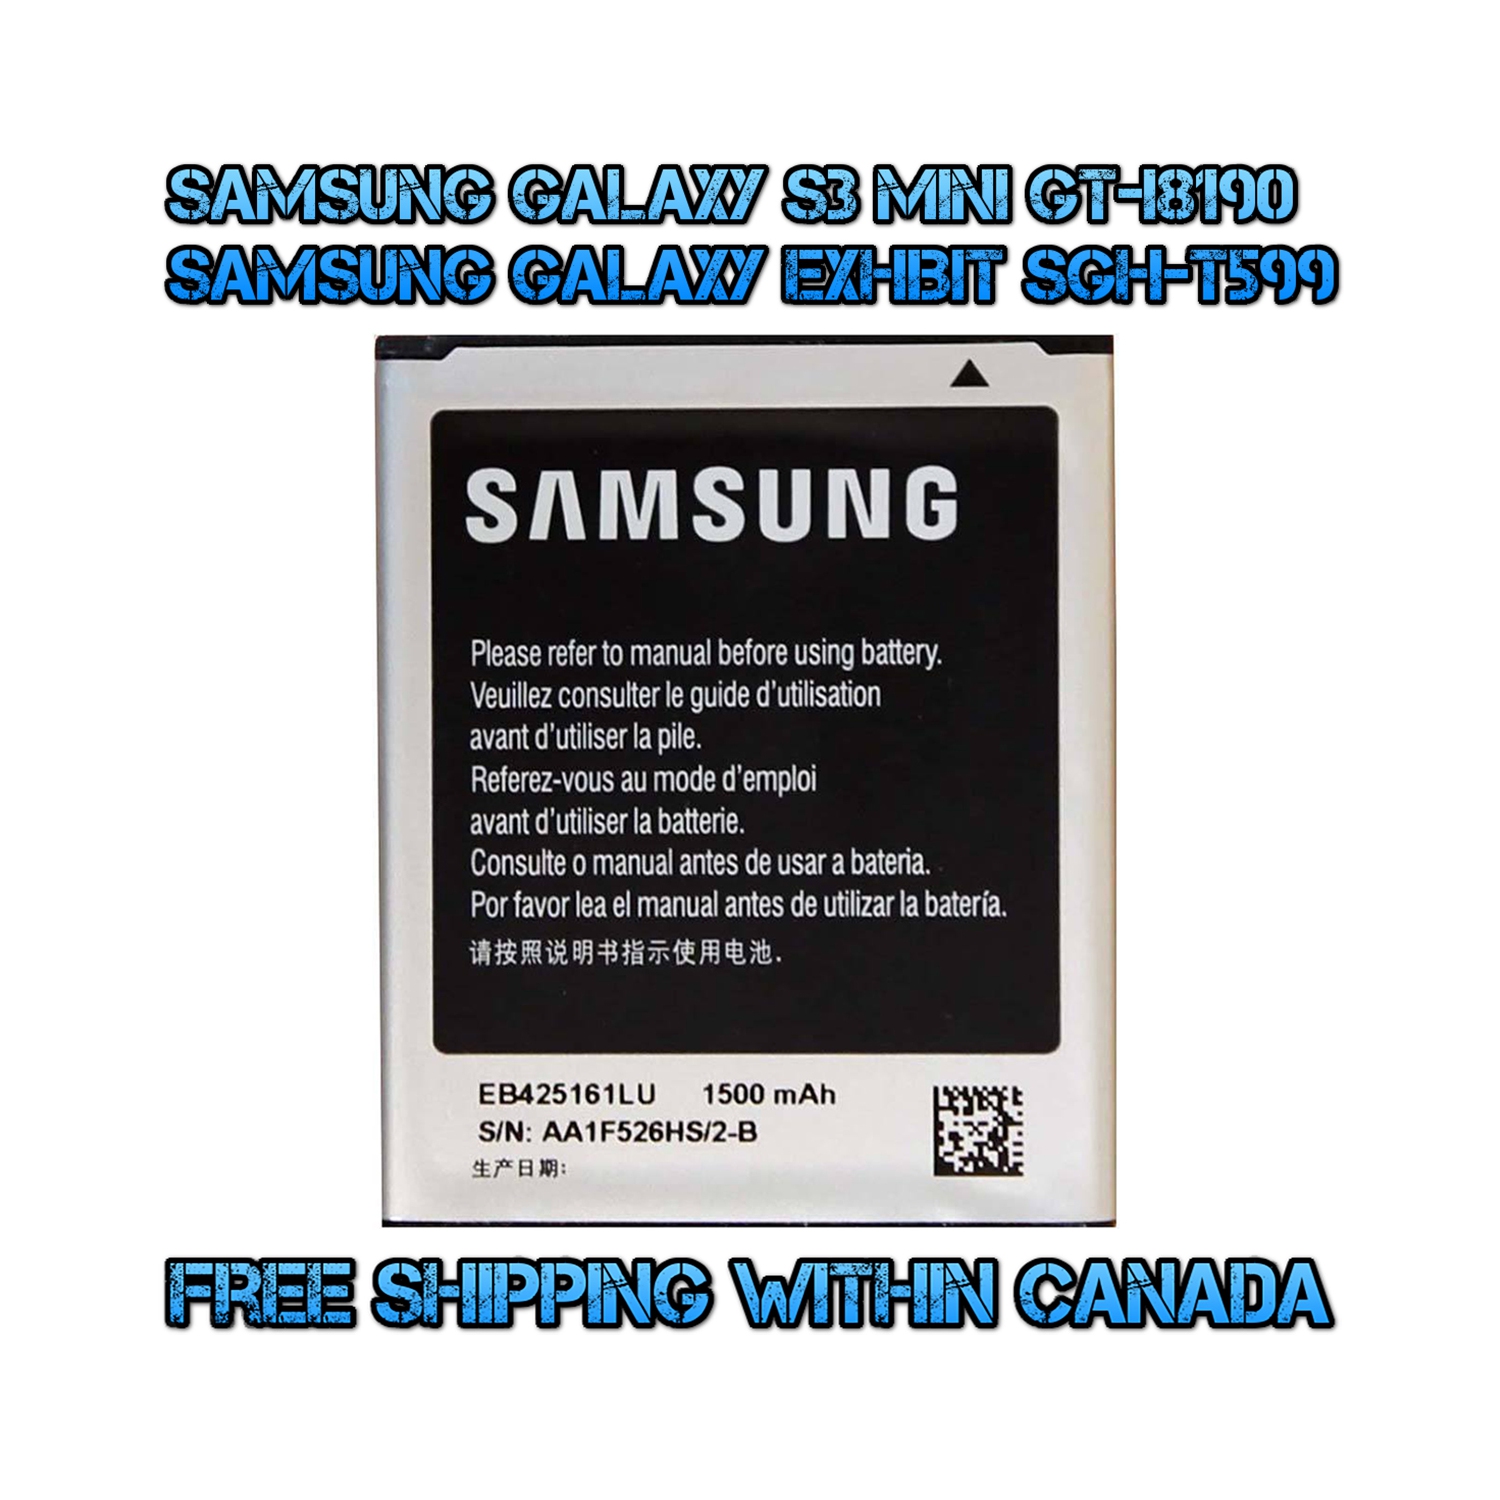 OEM Samsung EB425161LU Battery 1500 mAh for Galaxy S3 Mini i8190 Exhibit T599